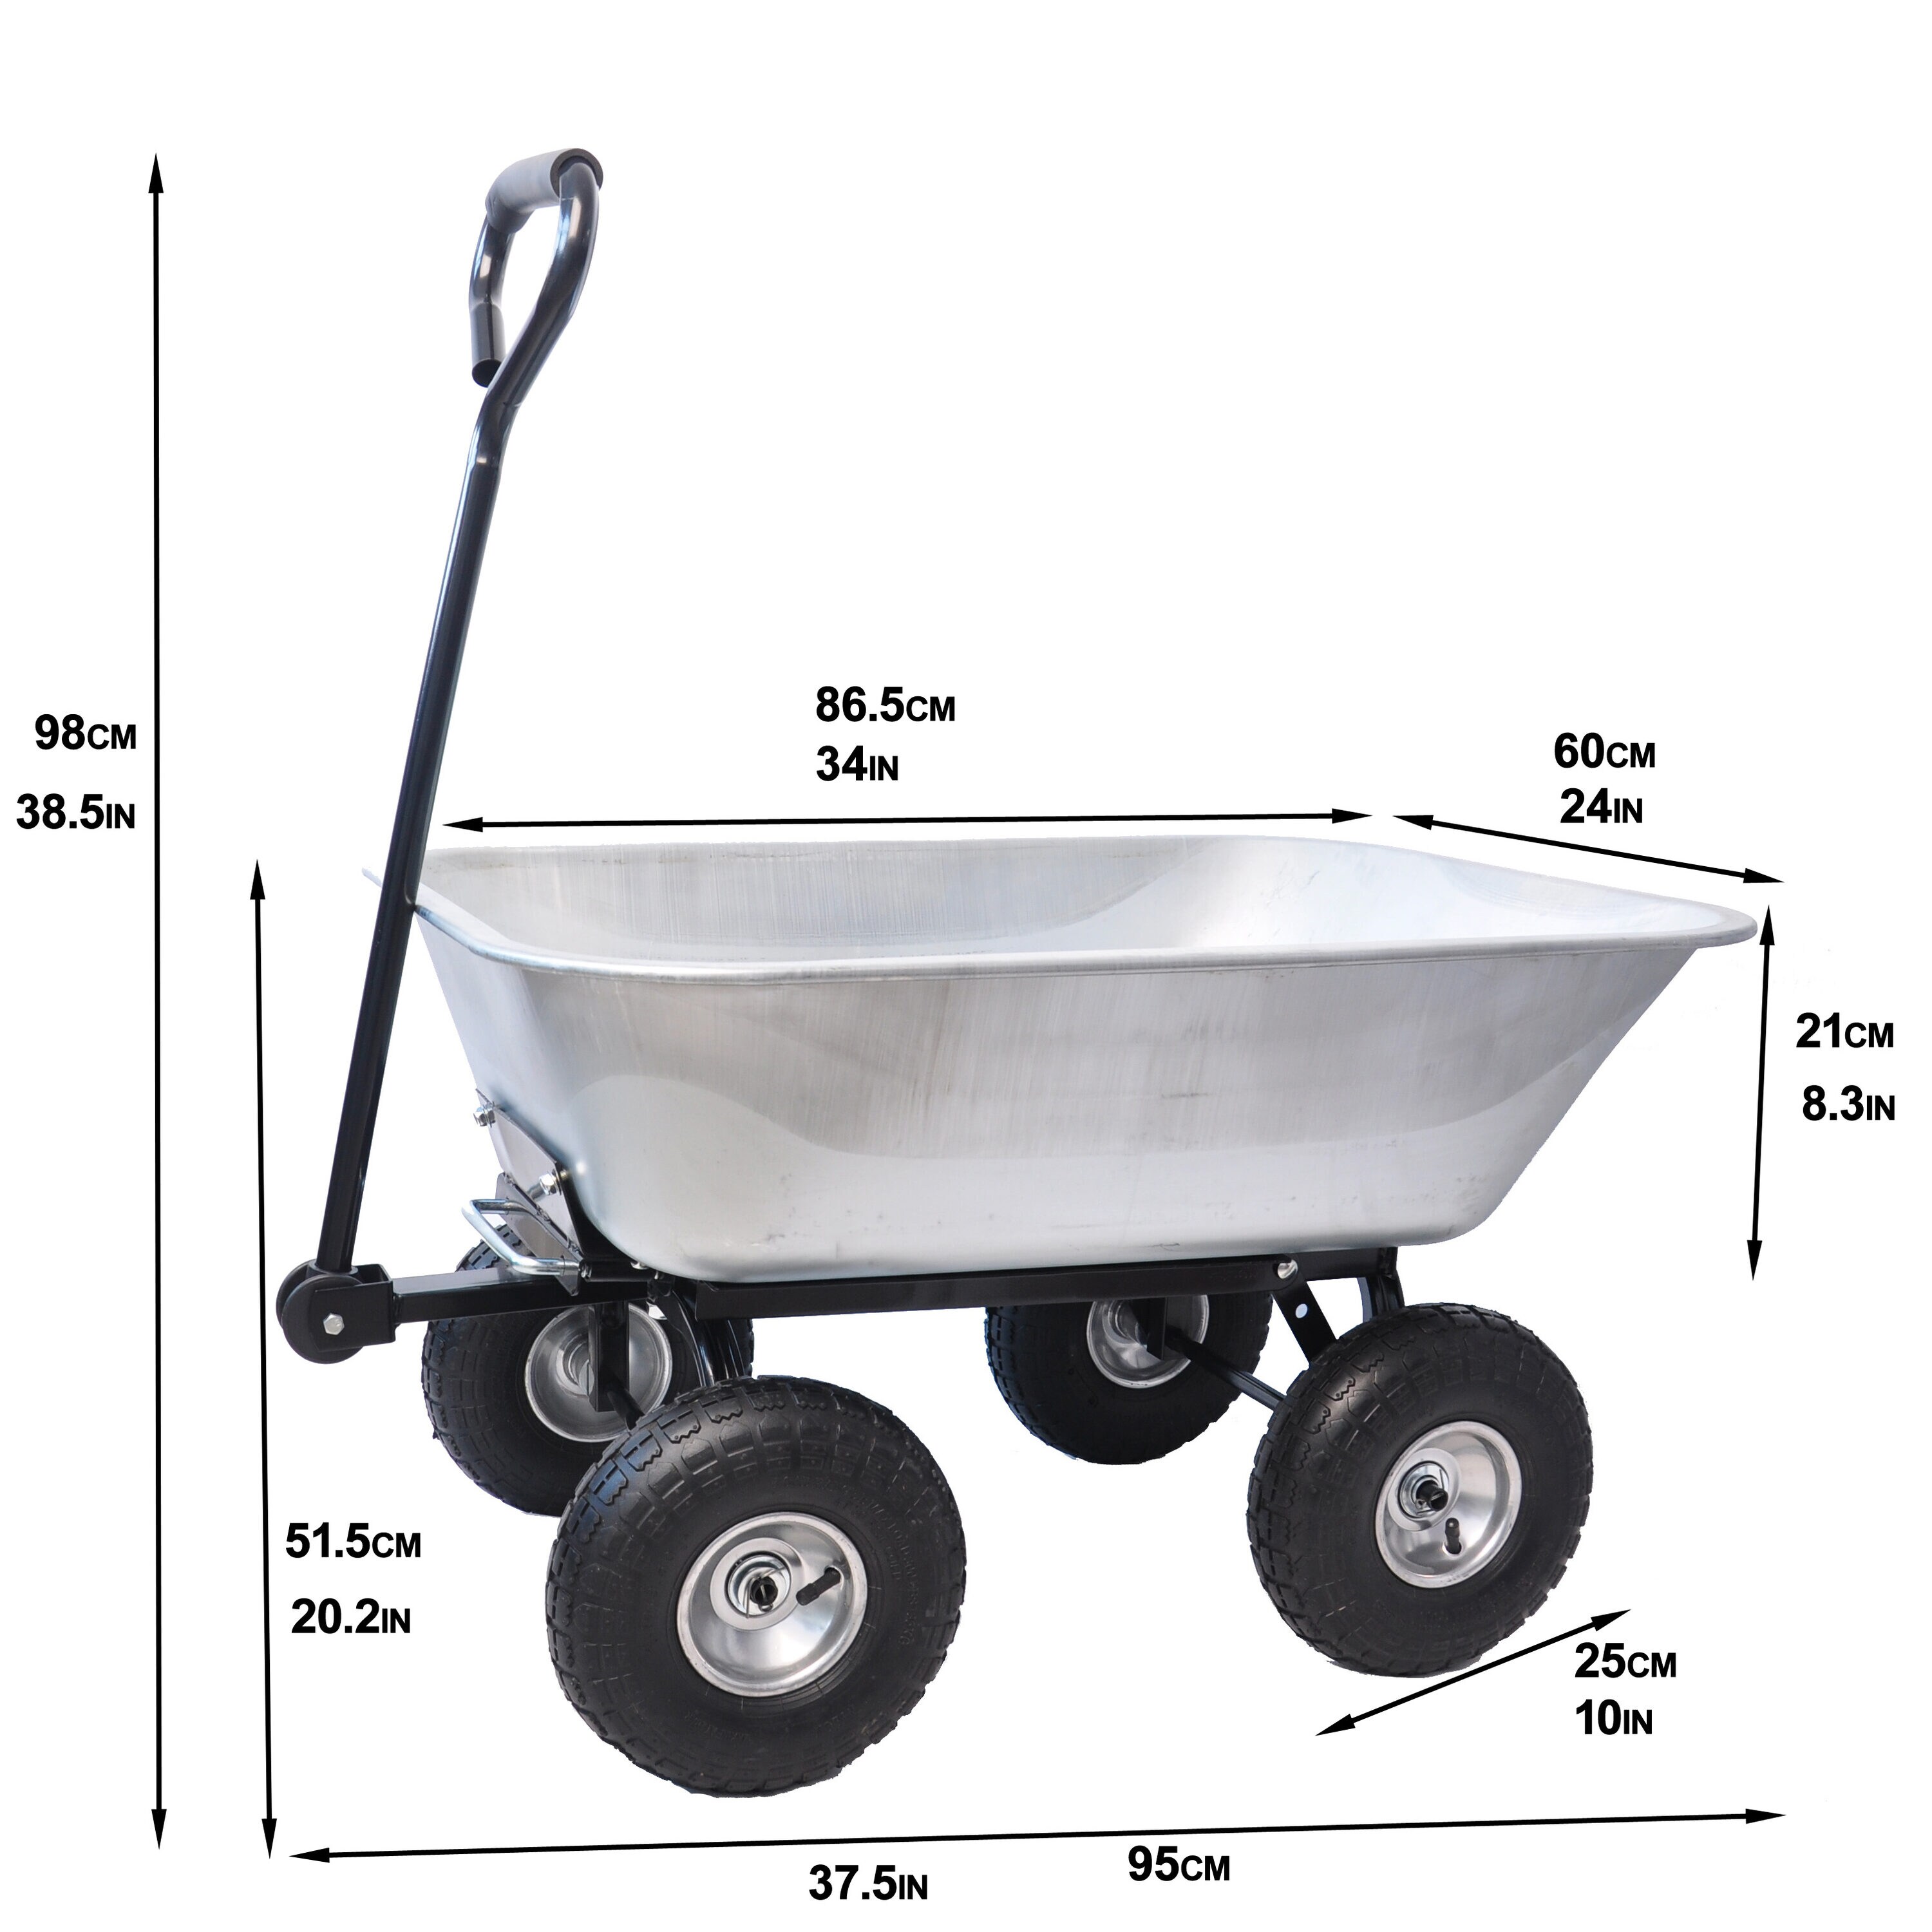 Yard Butler EZ Turn Hose Cart : heavy duty 4 wheel garden hose wagon